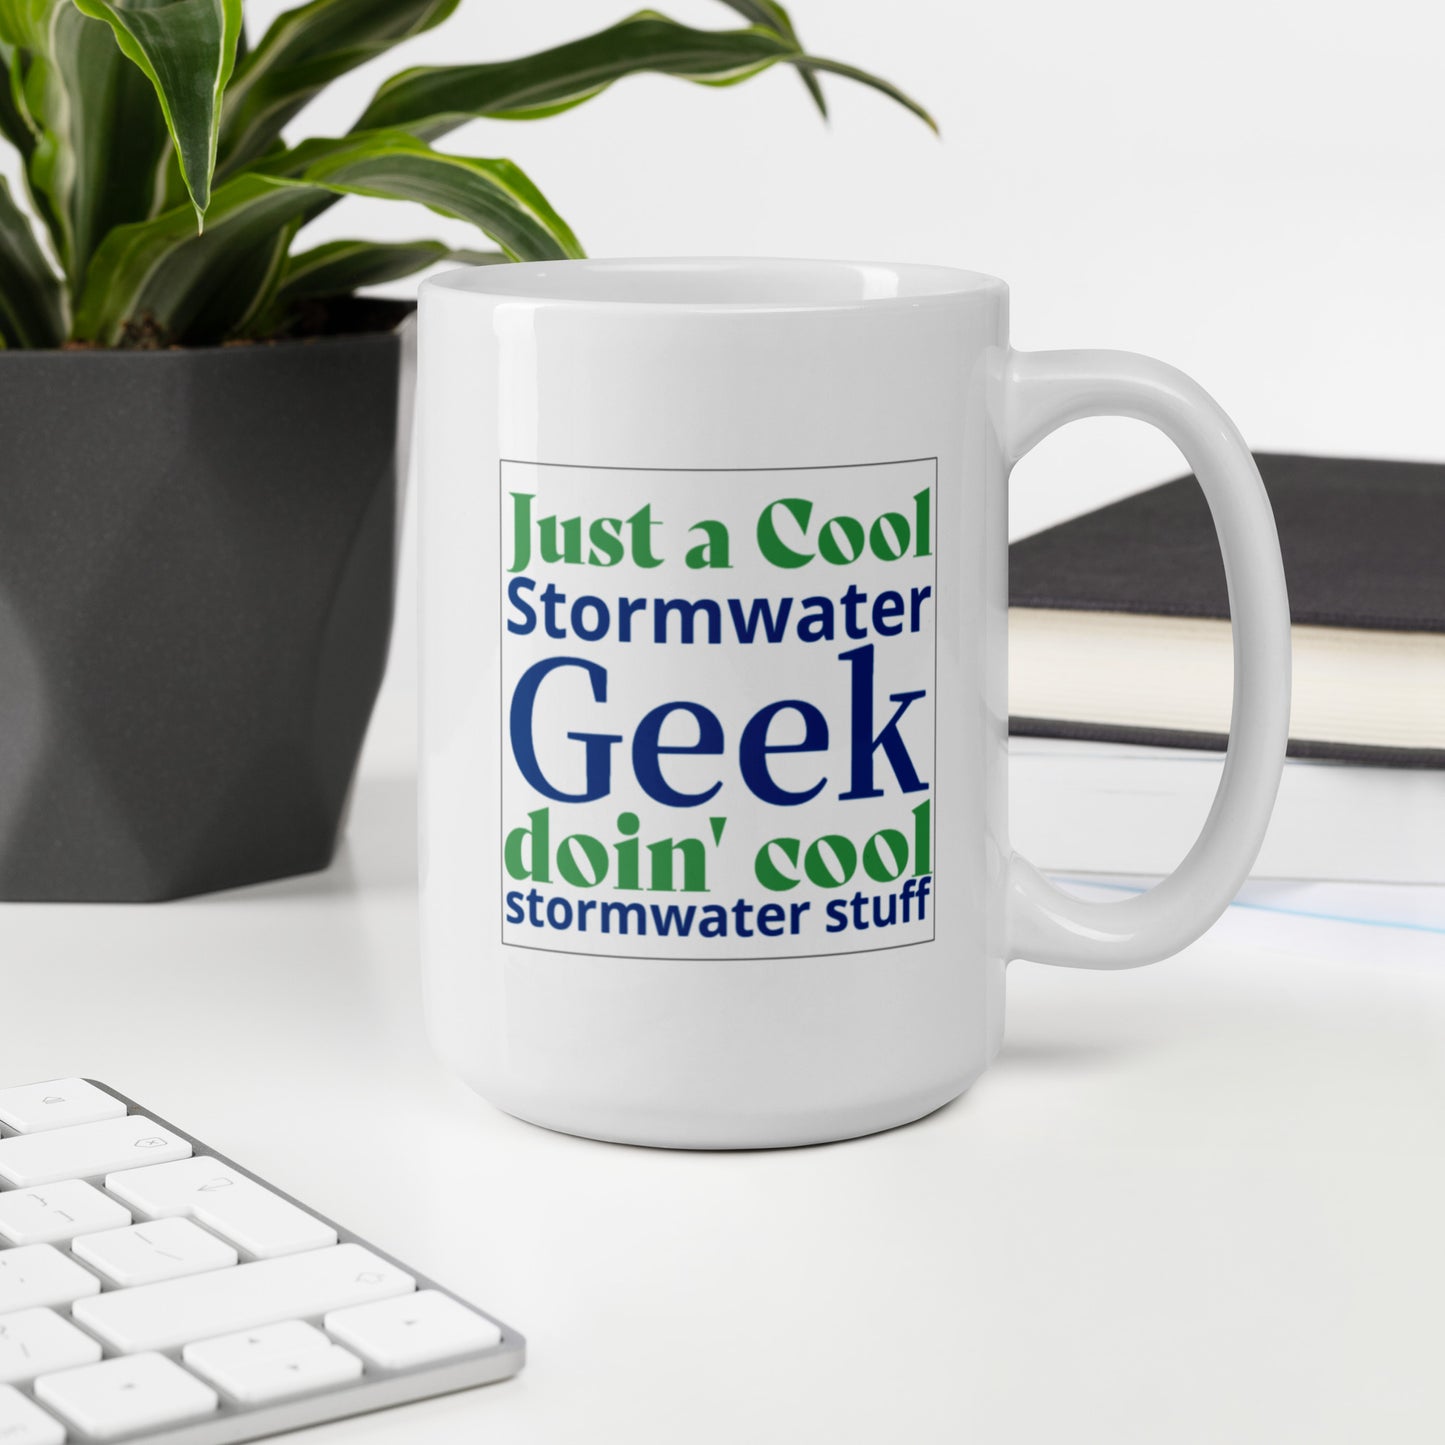 Cool Stormwater Geek (blue/green) - White glossy mug